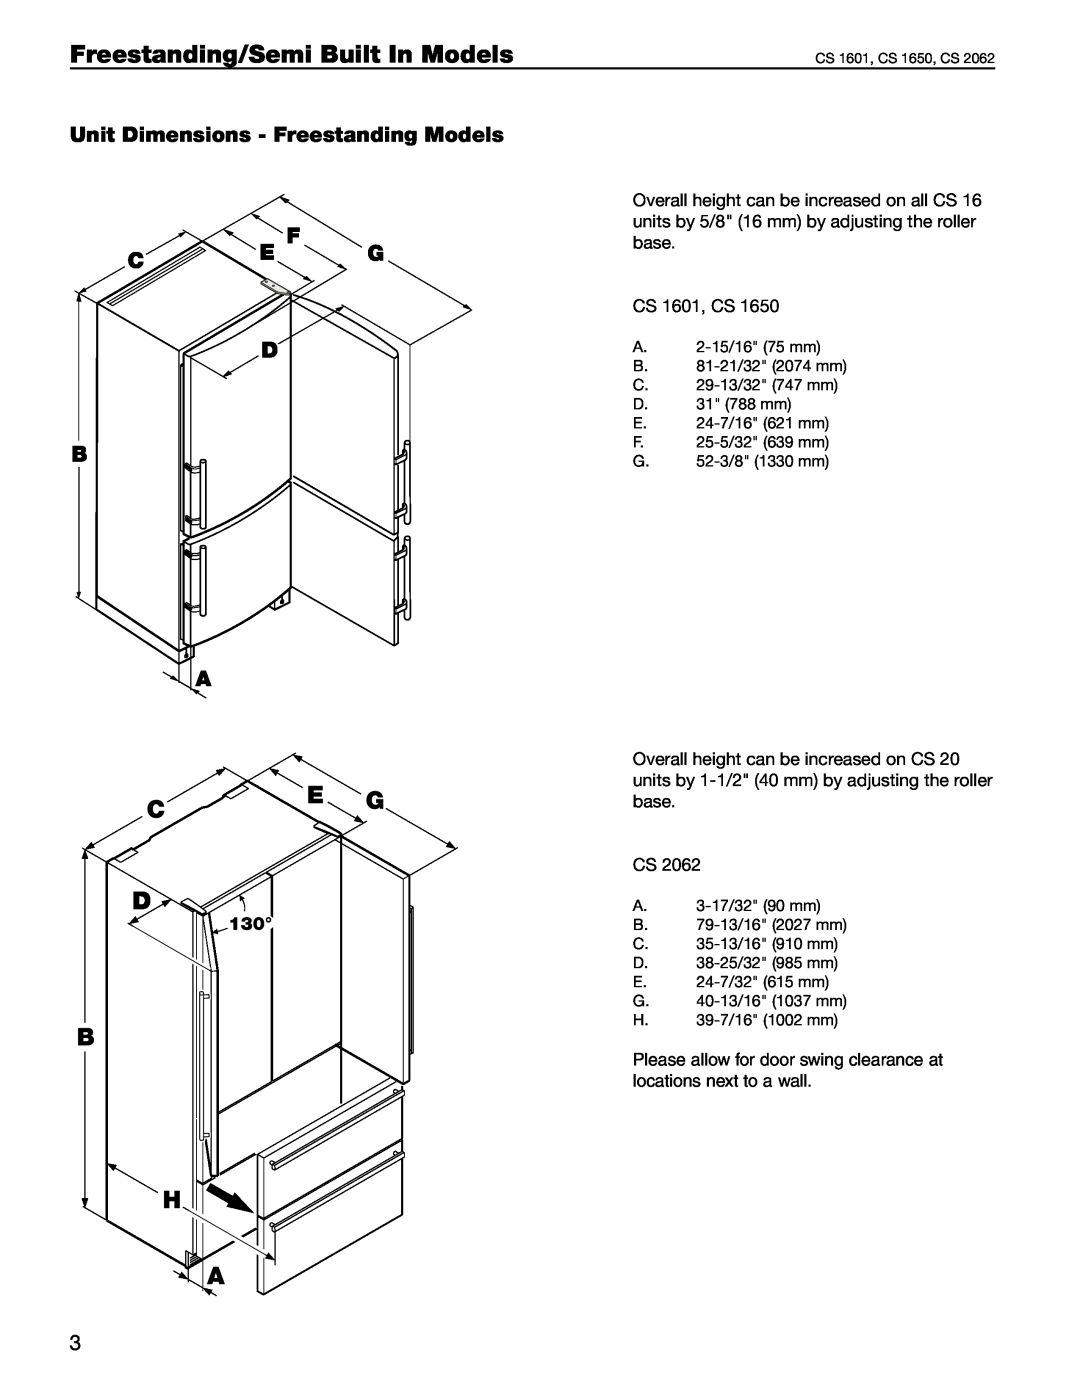 Liebherr 30, 36, 60 manual Unit Dimensions - Freestanding Models, Freestanding/Semi Built In Models 